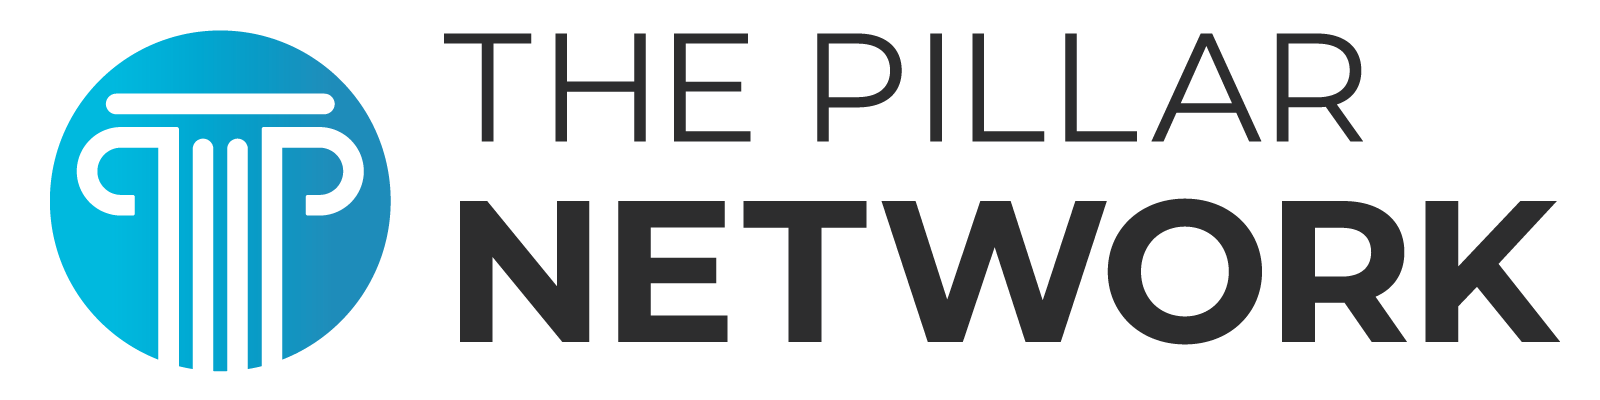 The Pillar Network Logo